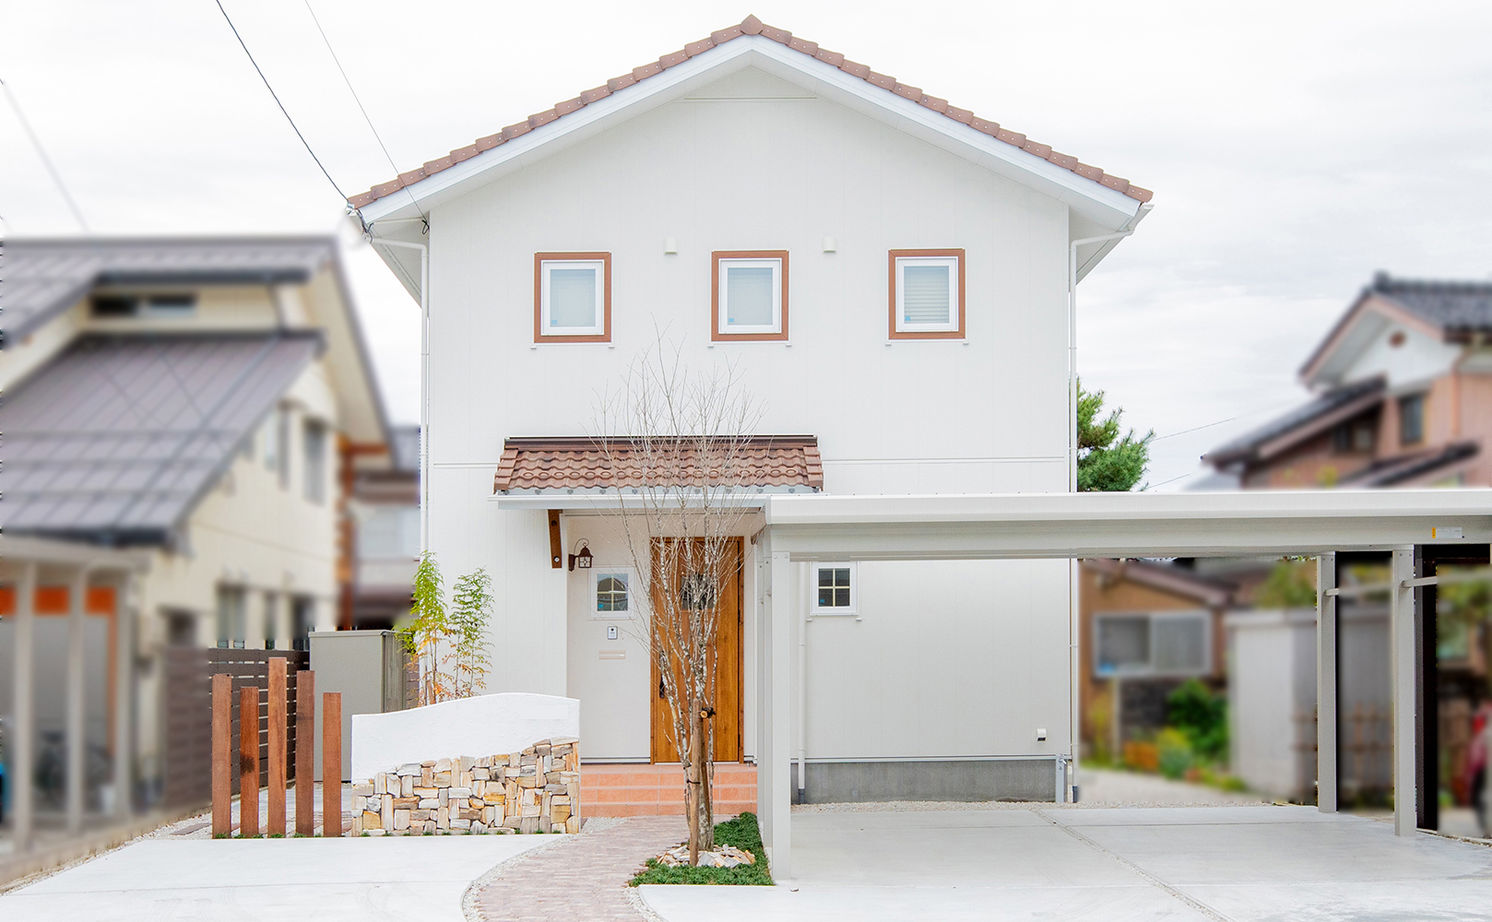 Suumo 2500 2999万円 三角屋根の白い外観 無垢材や漆喰 和紙など自然素材の住空間は 大人かわいい仕上がり 山下ホーム の建築実例詳細 注文住宅